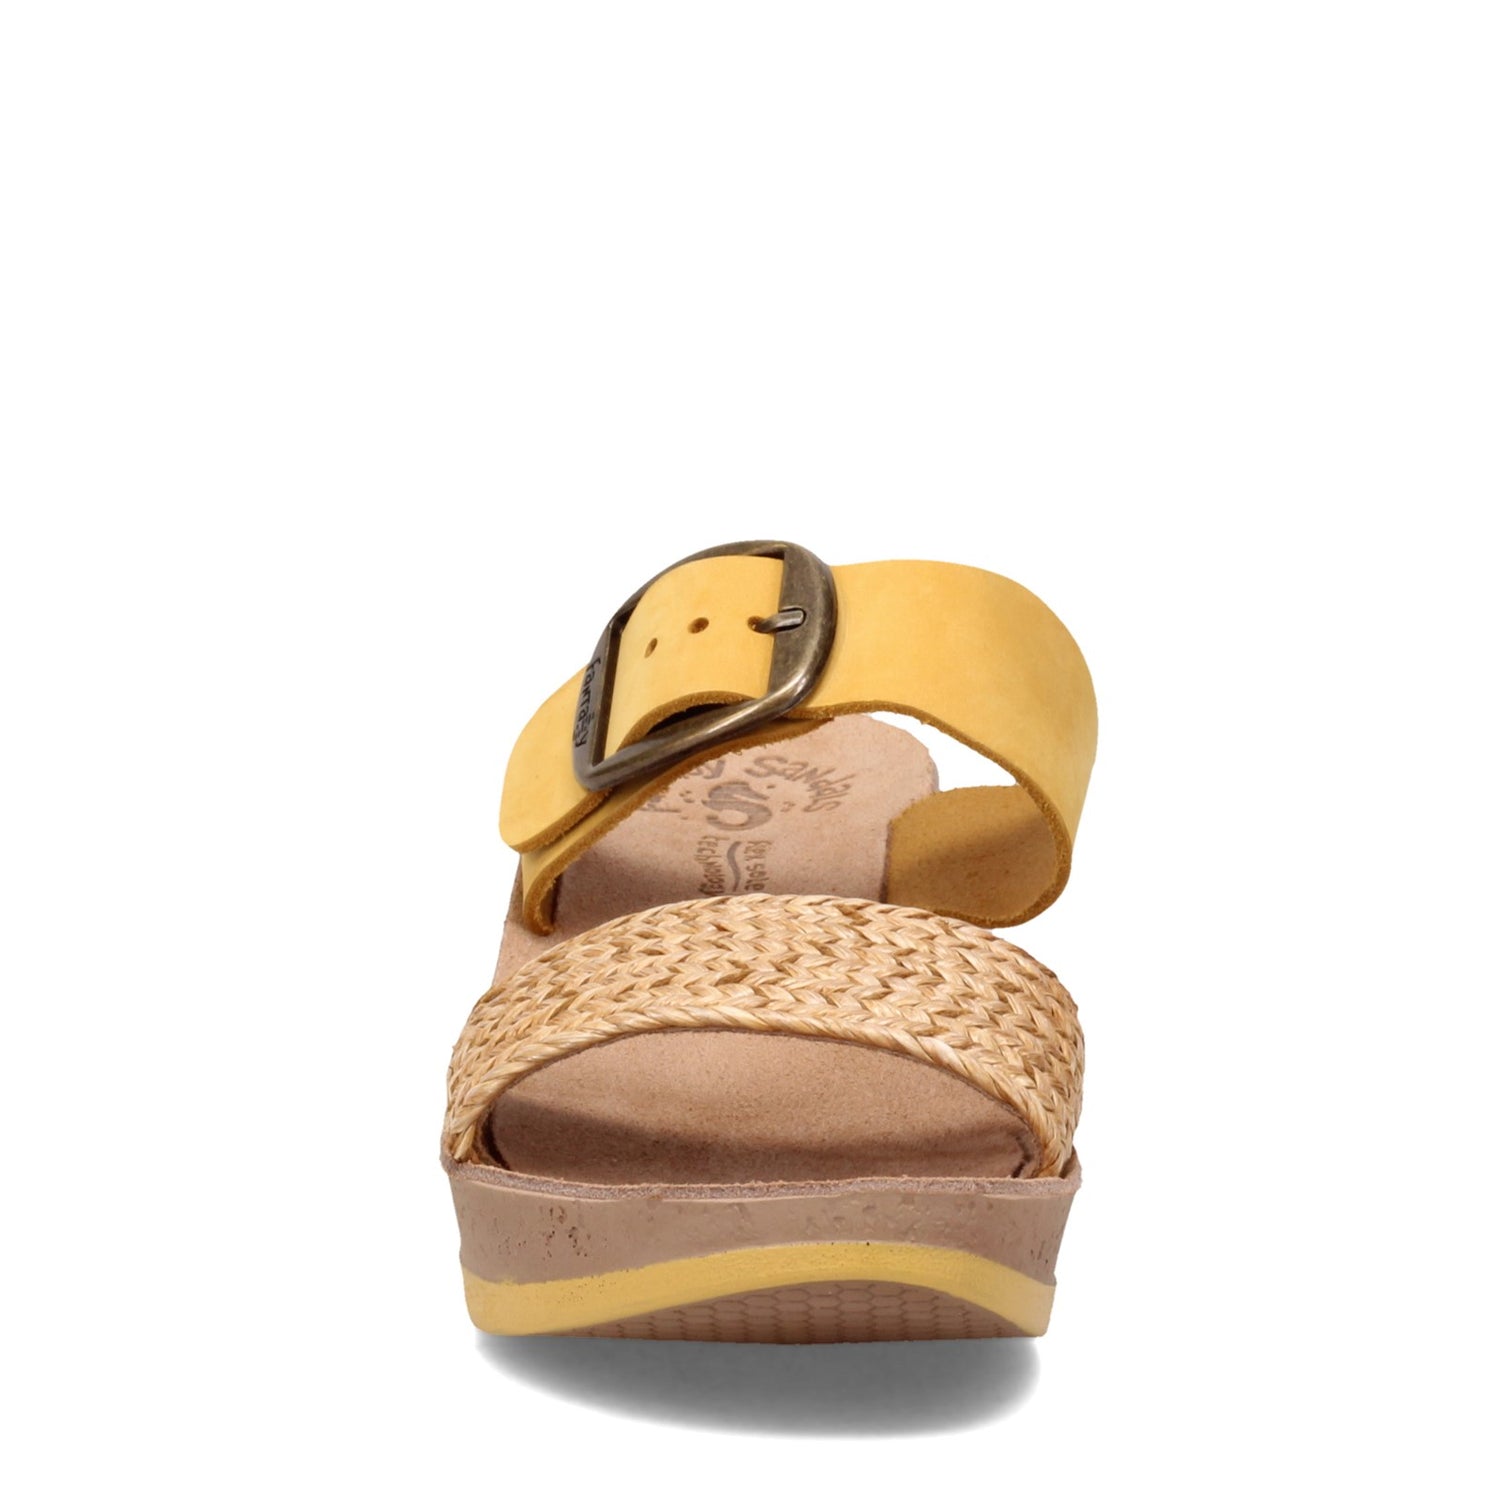 Peltz Shoes  Women's Fantasy Sandals Roxy Sandal YELLOW ROXY-MAYO